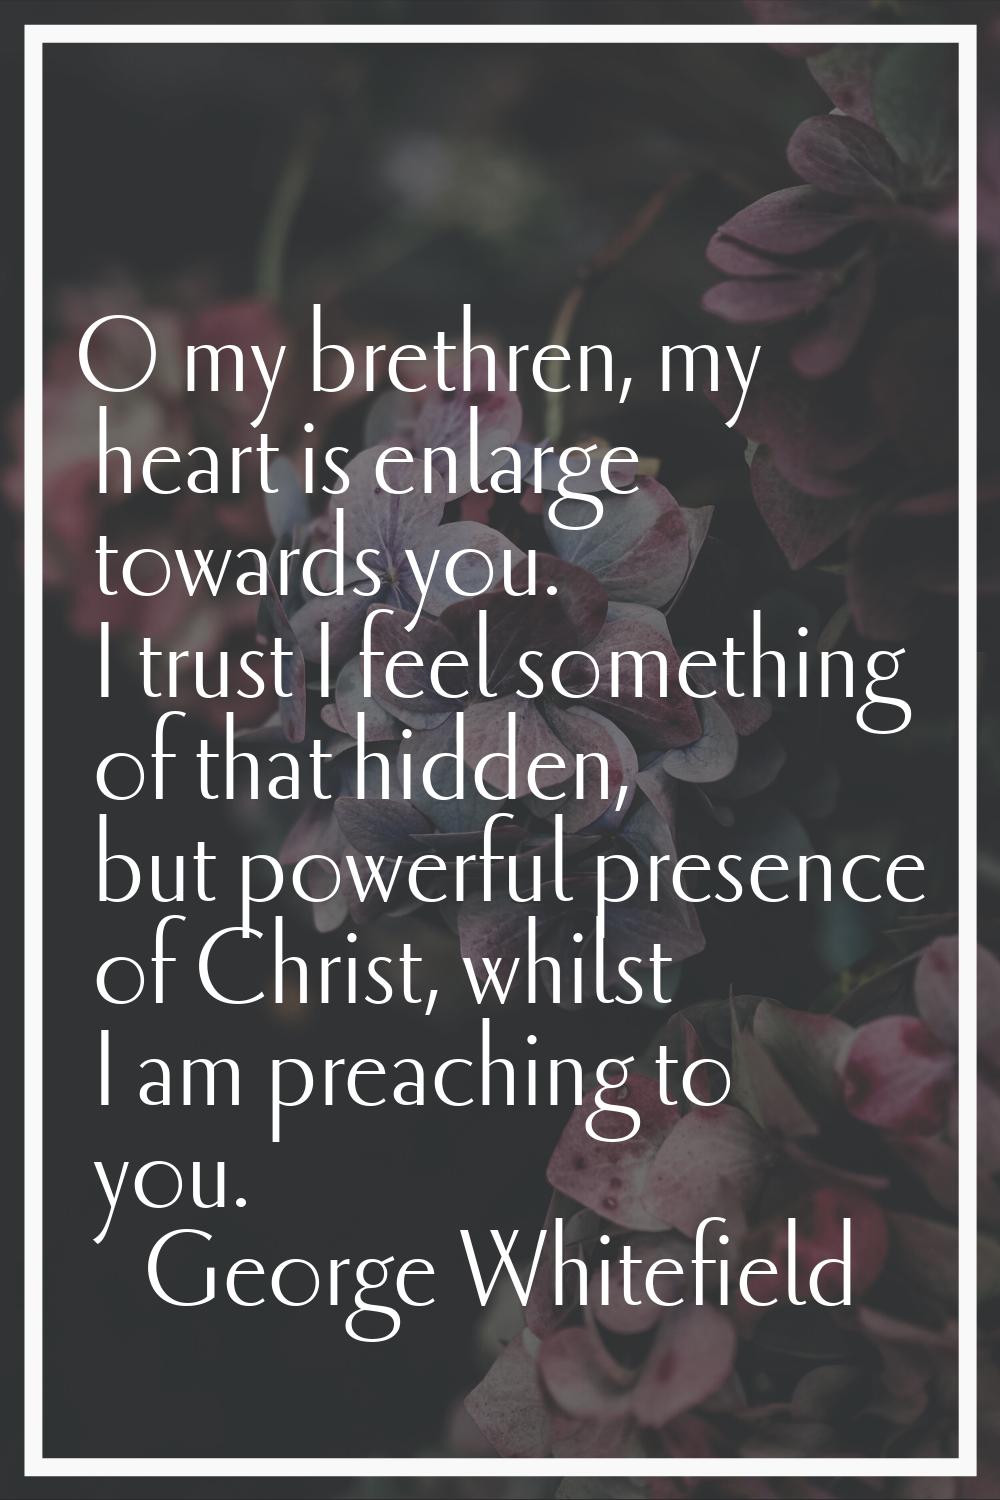 O my brethren, my heart is enlarge towards you. I trust I feel something of that hidden, but powerf